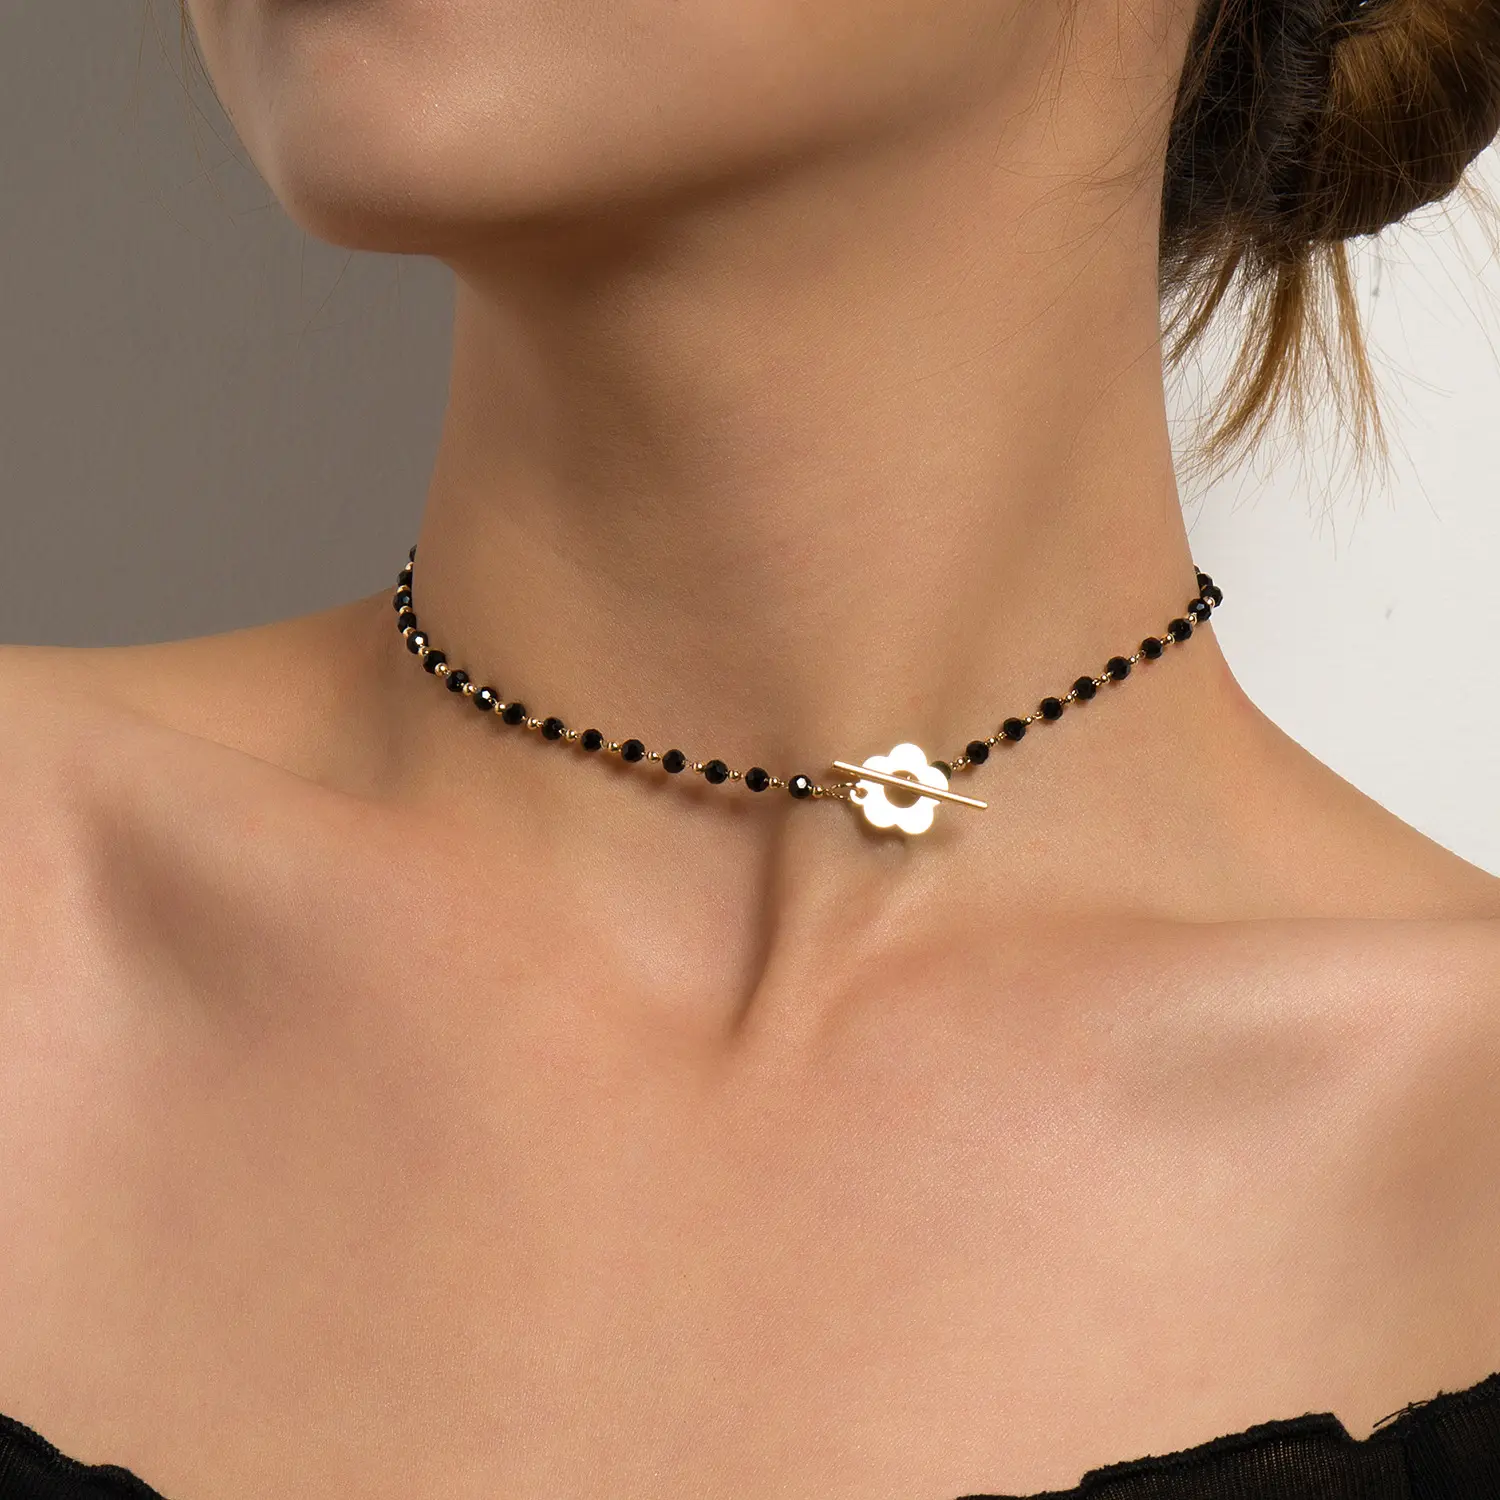 X0291 Fashion Jewelry 2022 Acrylic Black Bead Chains Strand Choker Necklace Flowers Pendant Neck Jewelry For Women